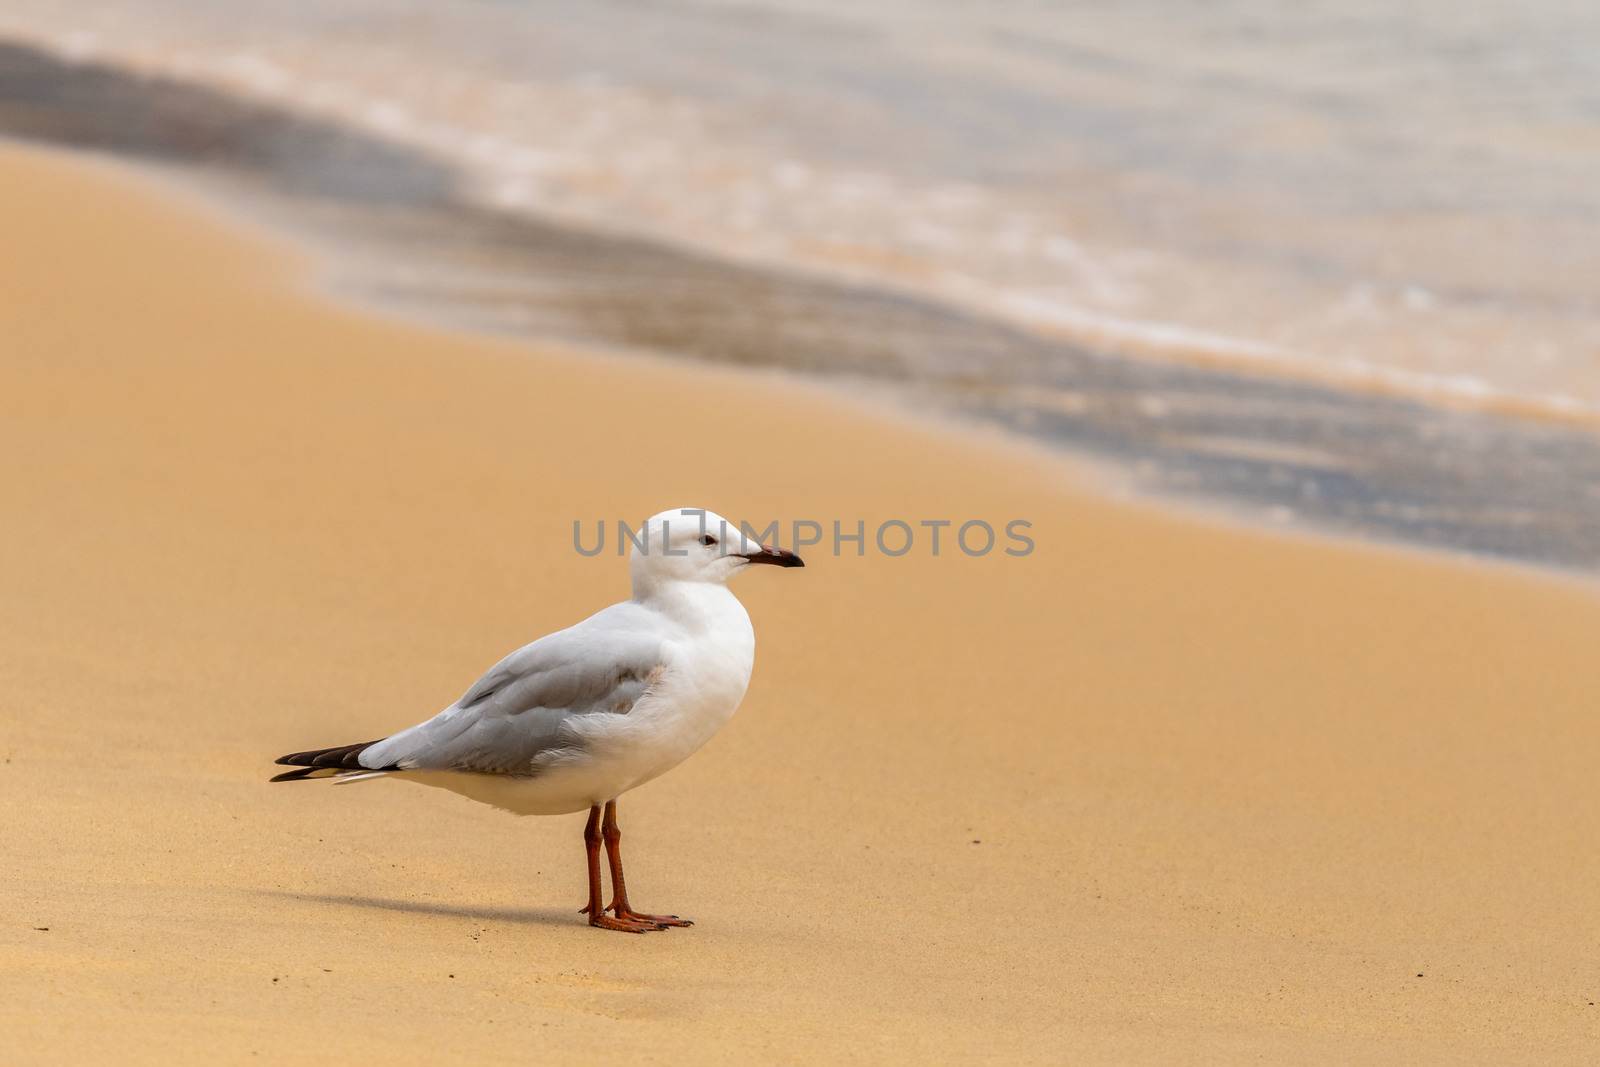 Seagull on Watson bay sandy coastline, Sydney, NSW Australia by mauricallari